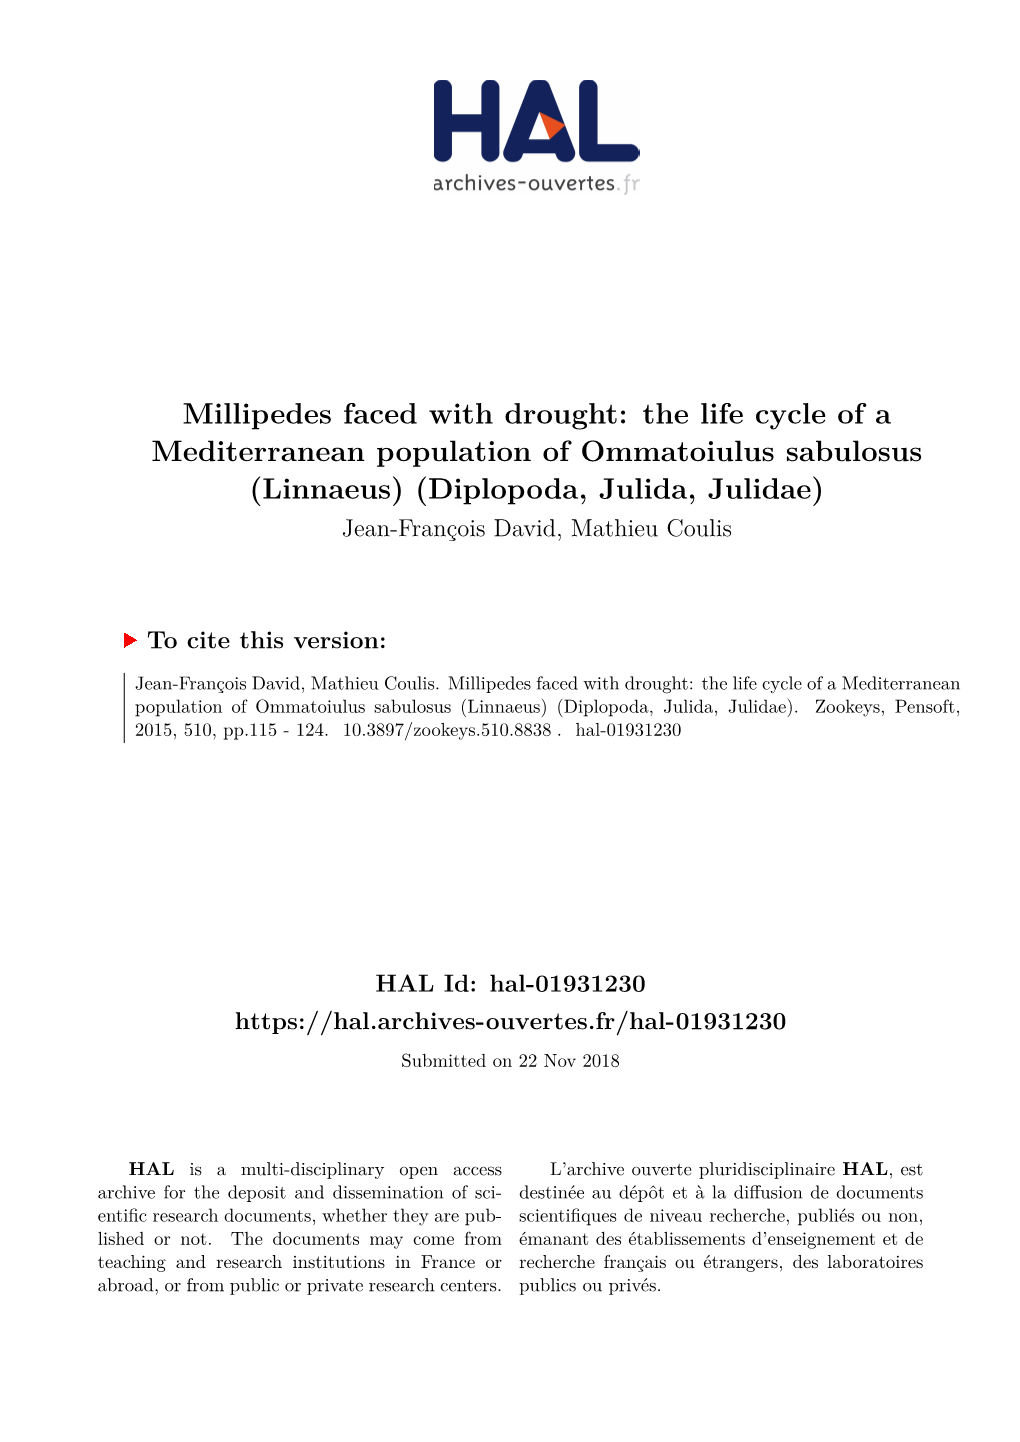 The Life Cycle of a Mediterranean Population of Ommatoiulus Sabulosus (Linnaeus) (Diplopoda, Julida, Julidae) Jean-François David, Mathieu Coulis